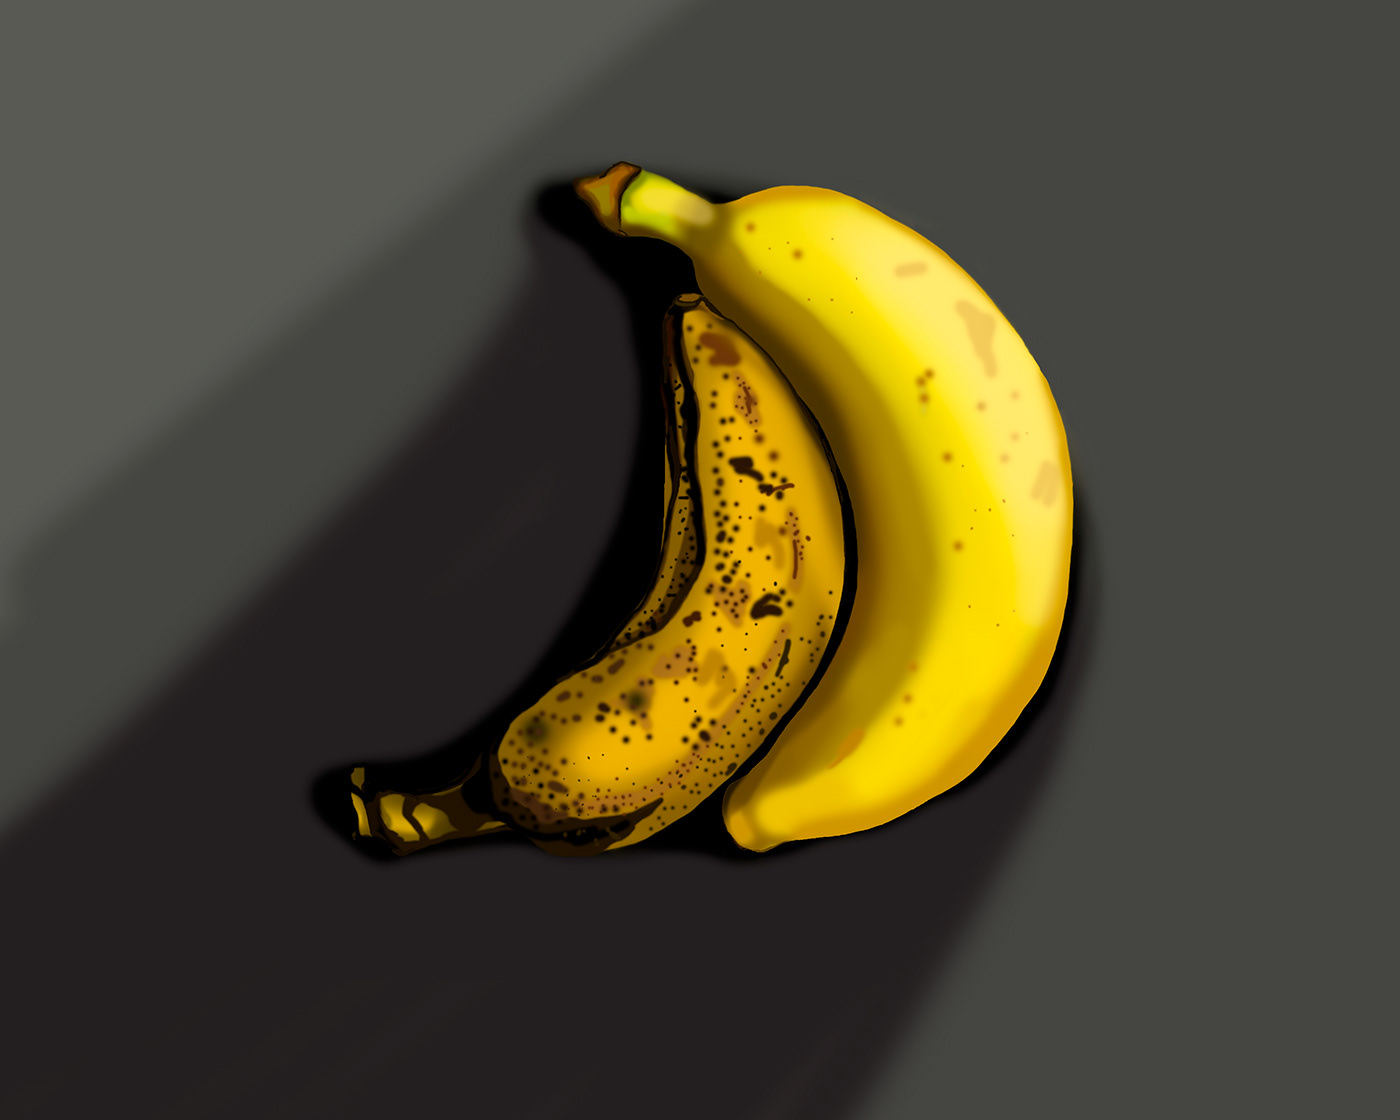 artillustration artwork Bananas fruits Illustrator photoshop